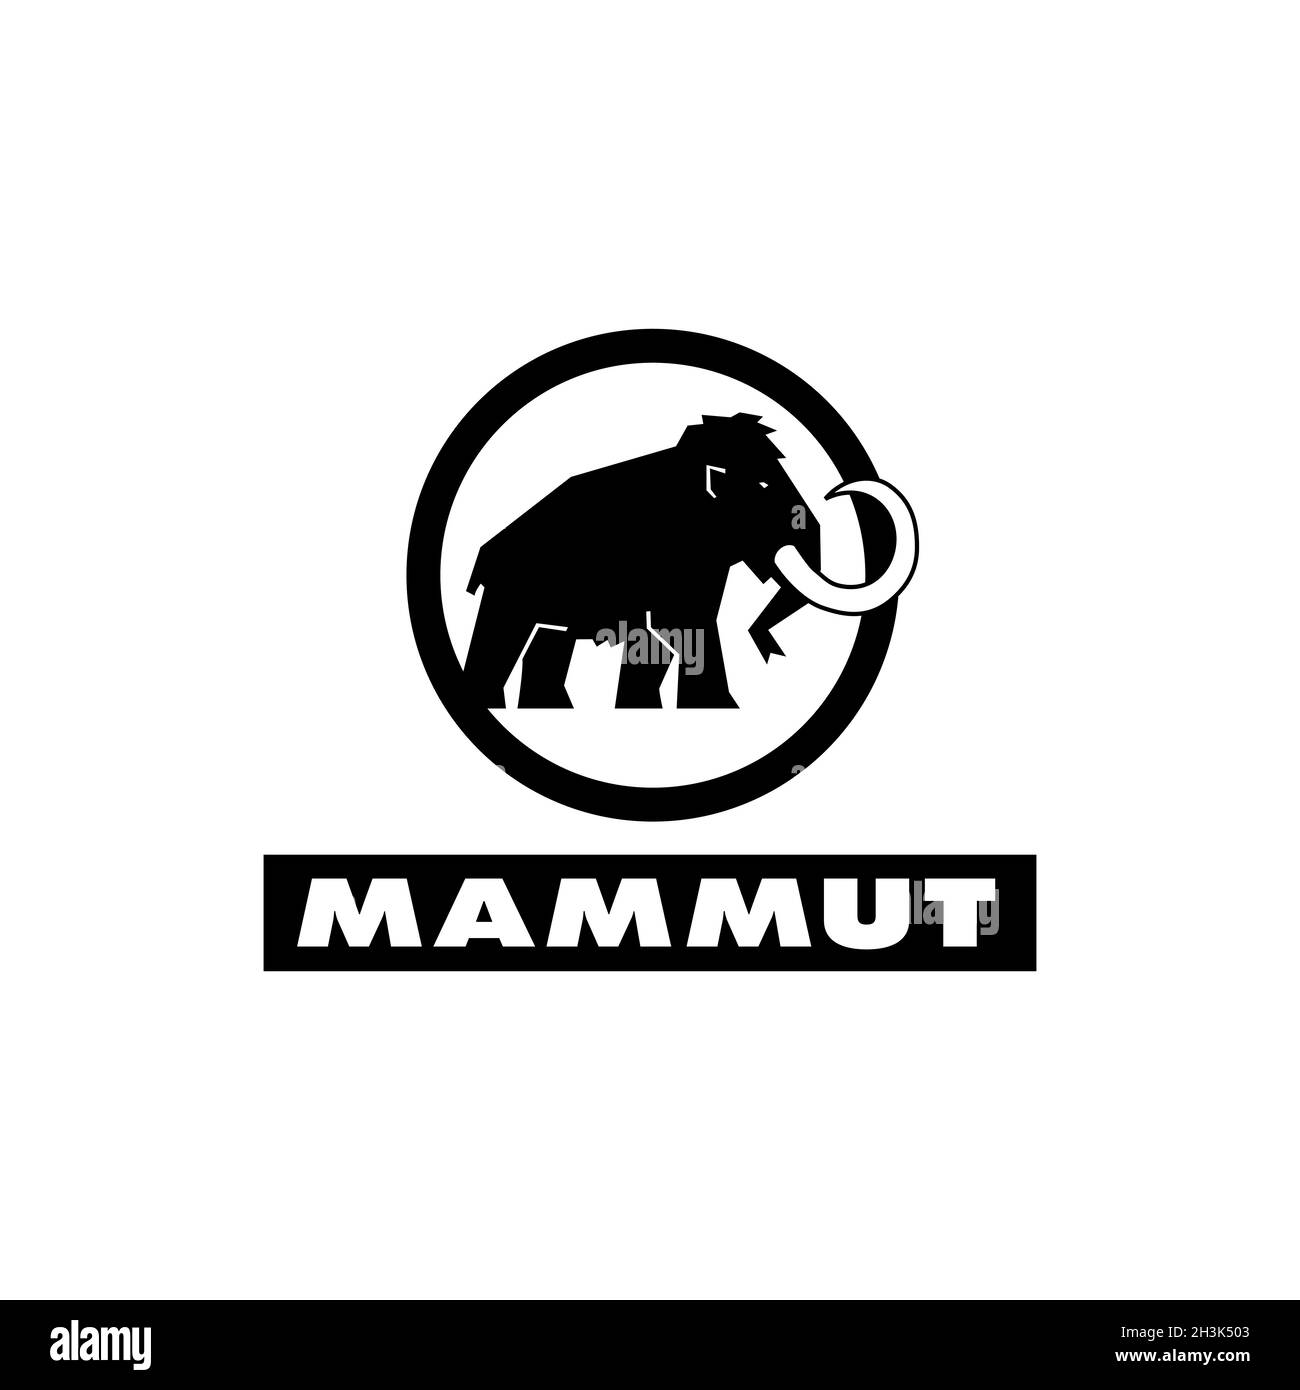 Mammut outdoor sport clothing brand logo. Editorial image ...